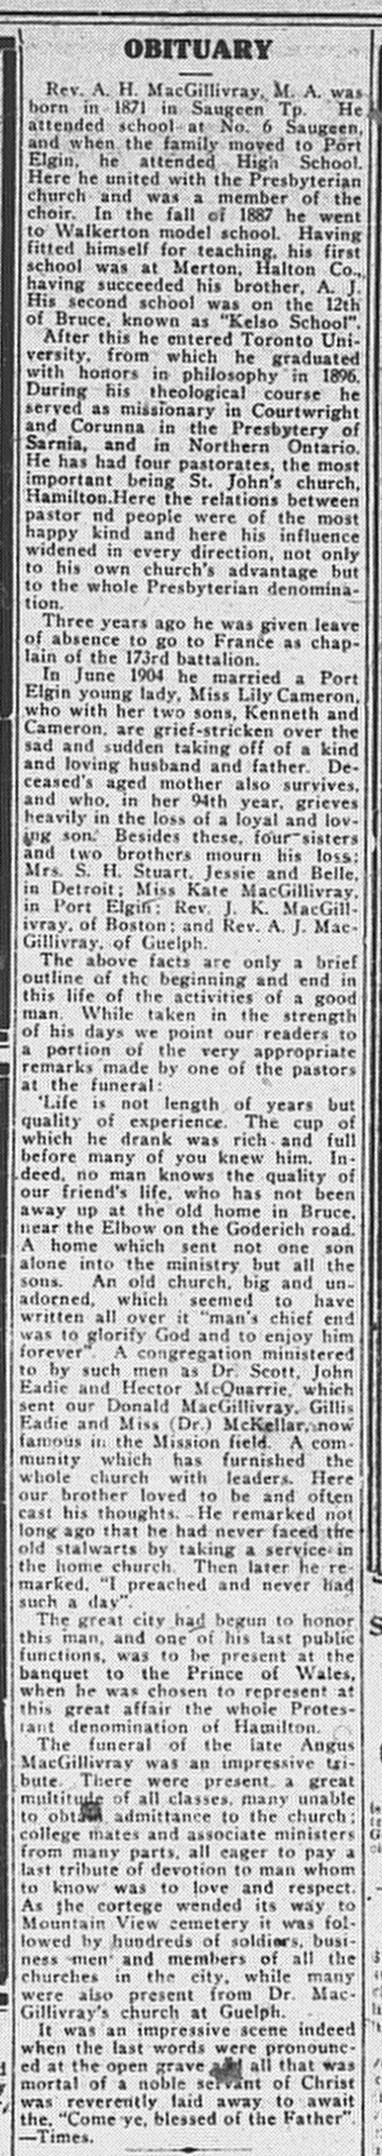 Paisley Advocate, December 10, 1919